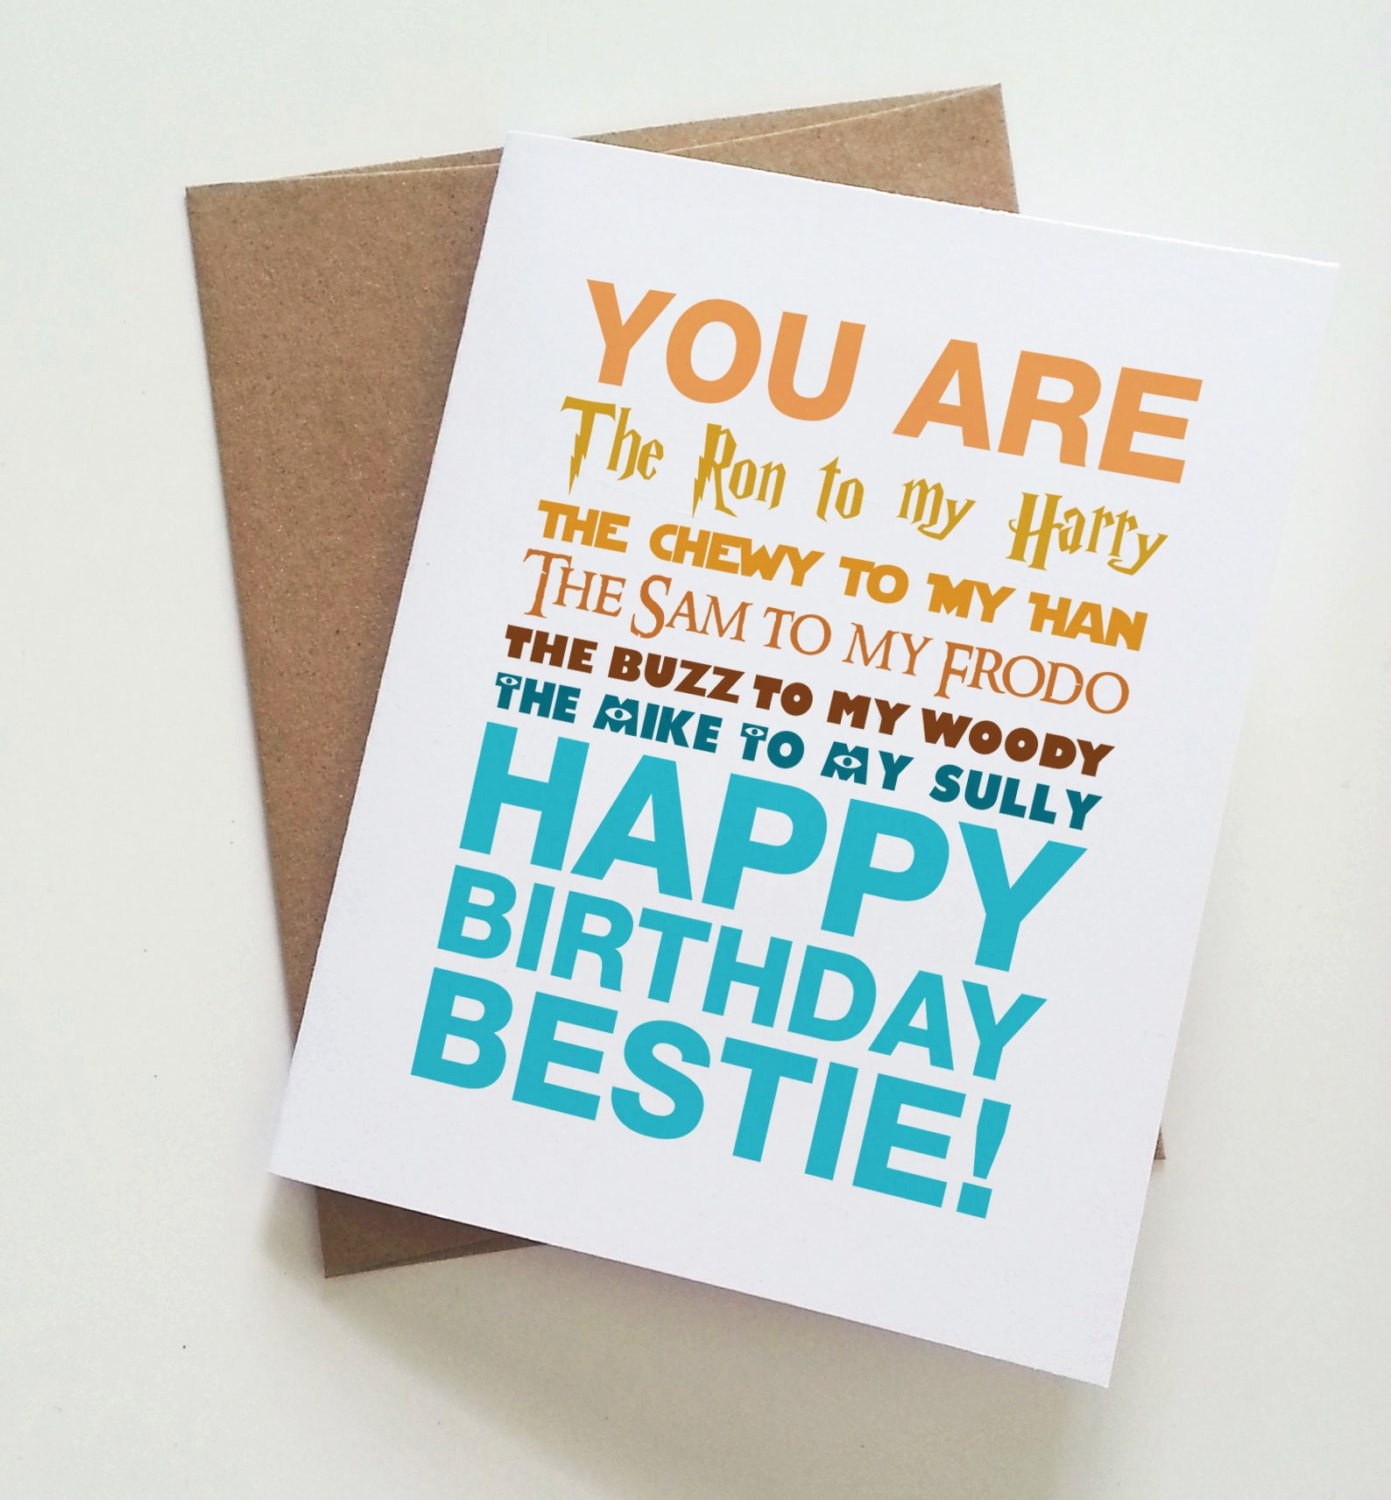 Birthday Card Ideas For Best Friend Funny Handmade Birthday Card Ideas For Best Friend Step Funny Pinterest